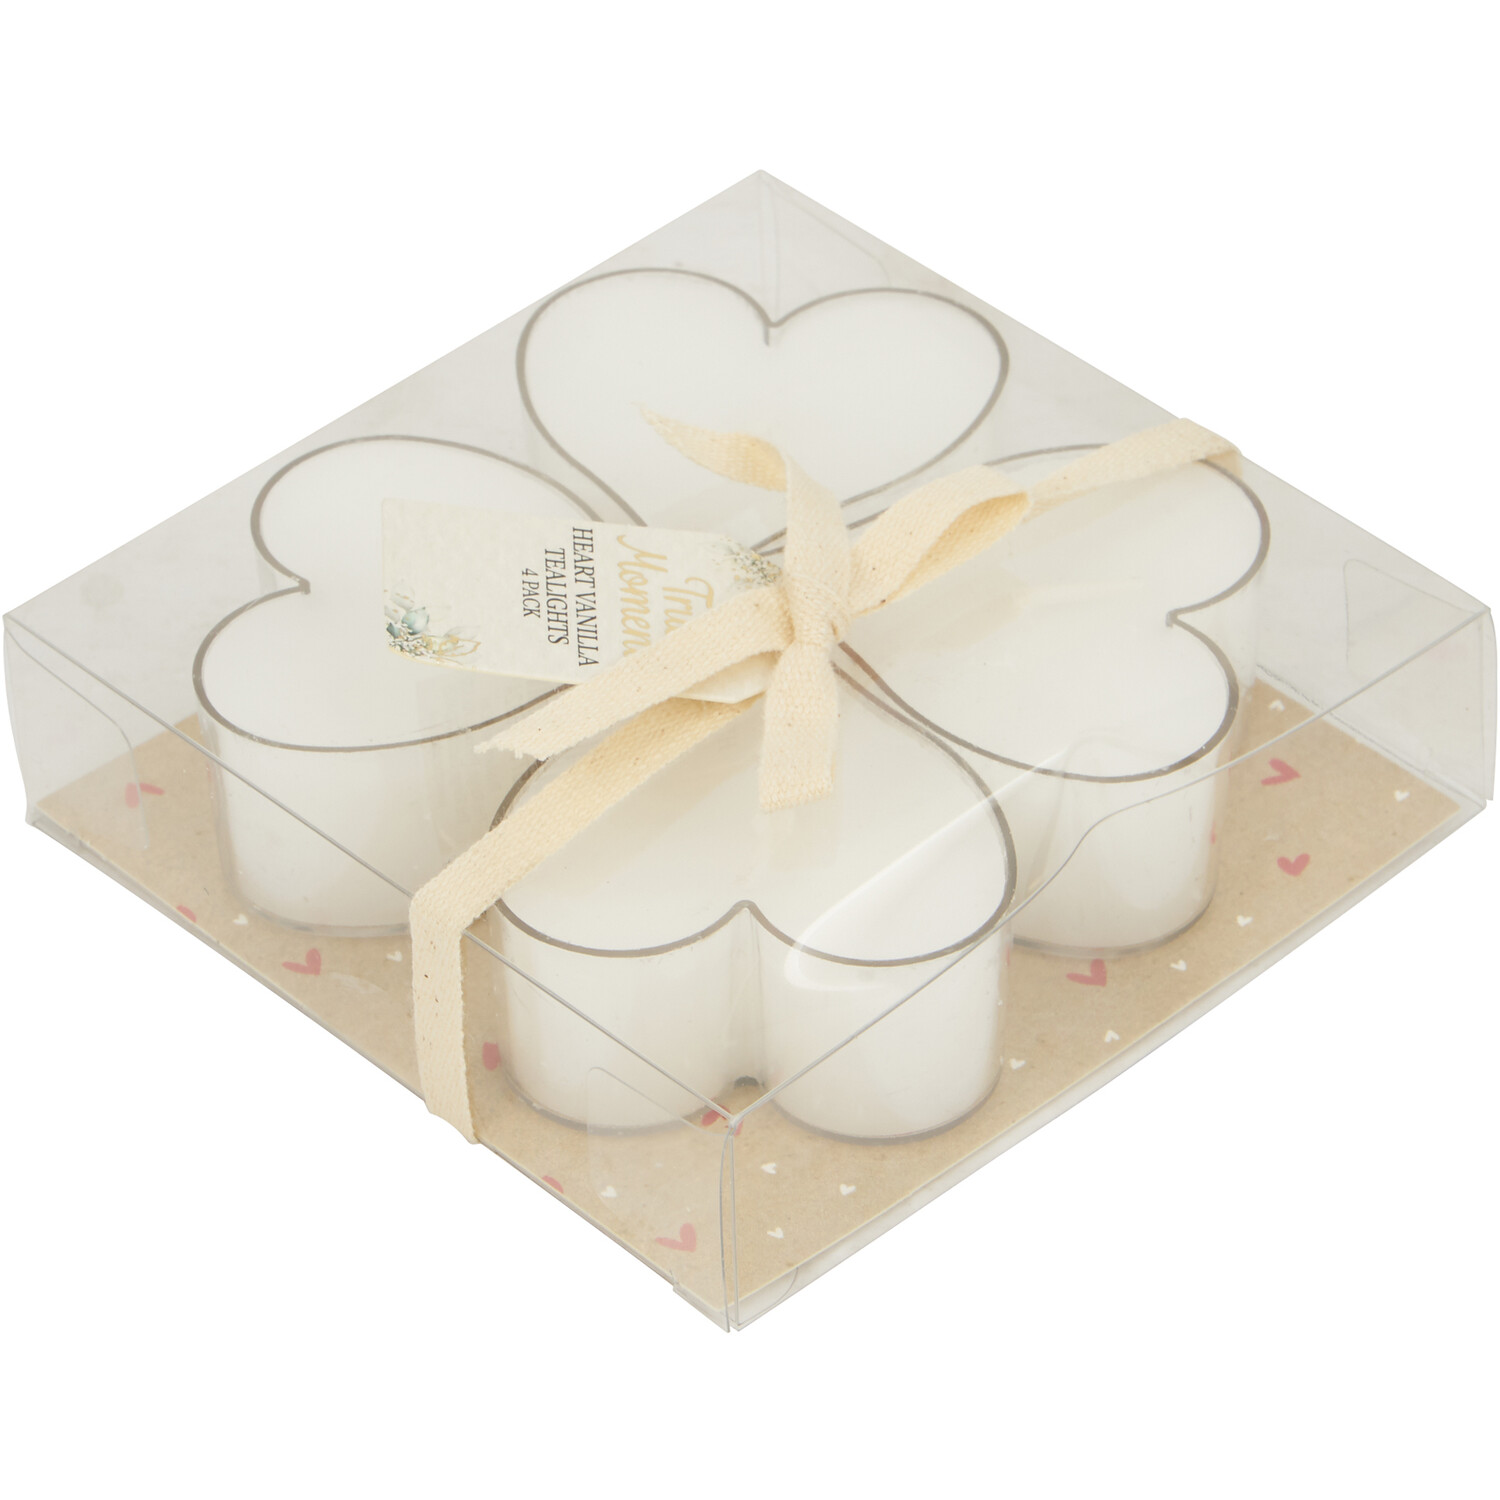 Pack of 4 Heart Vanilla Tealights - White Image 1